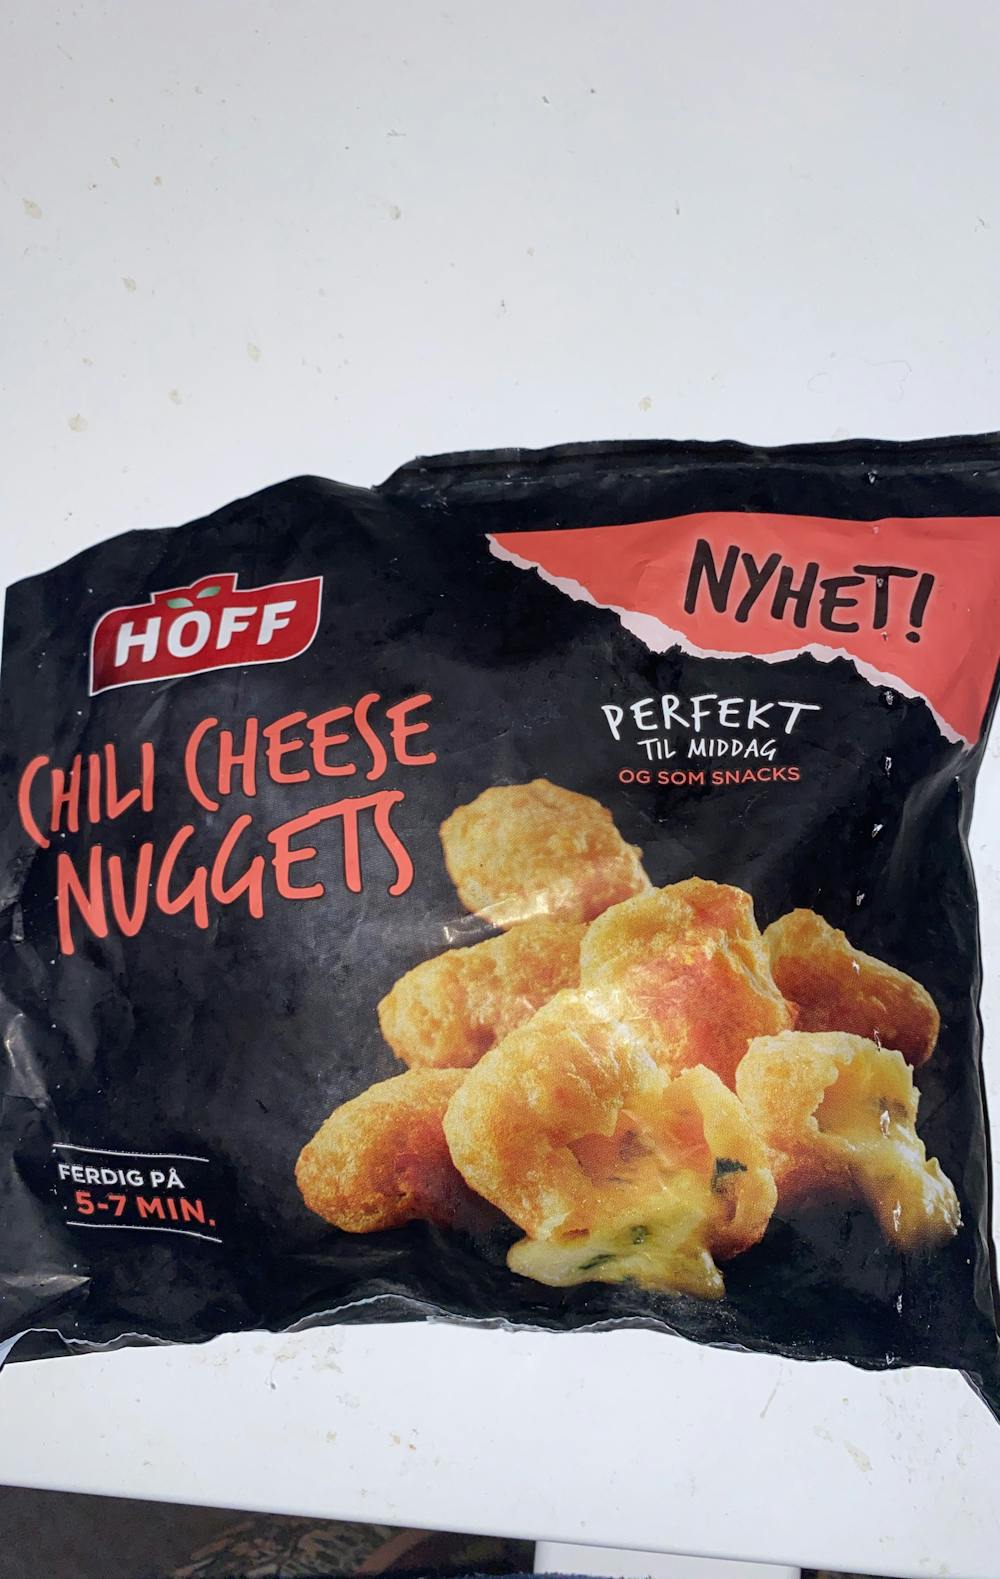 Chili cheese nuggets, Noba